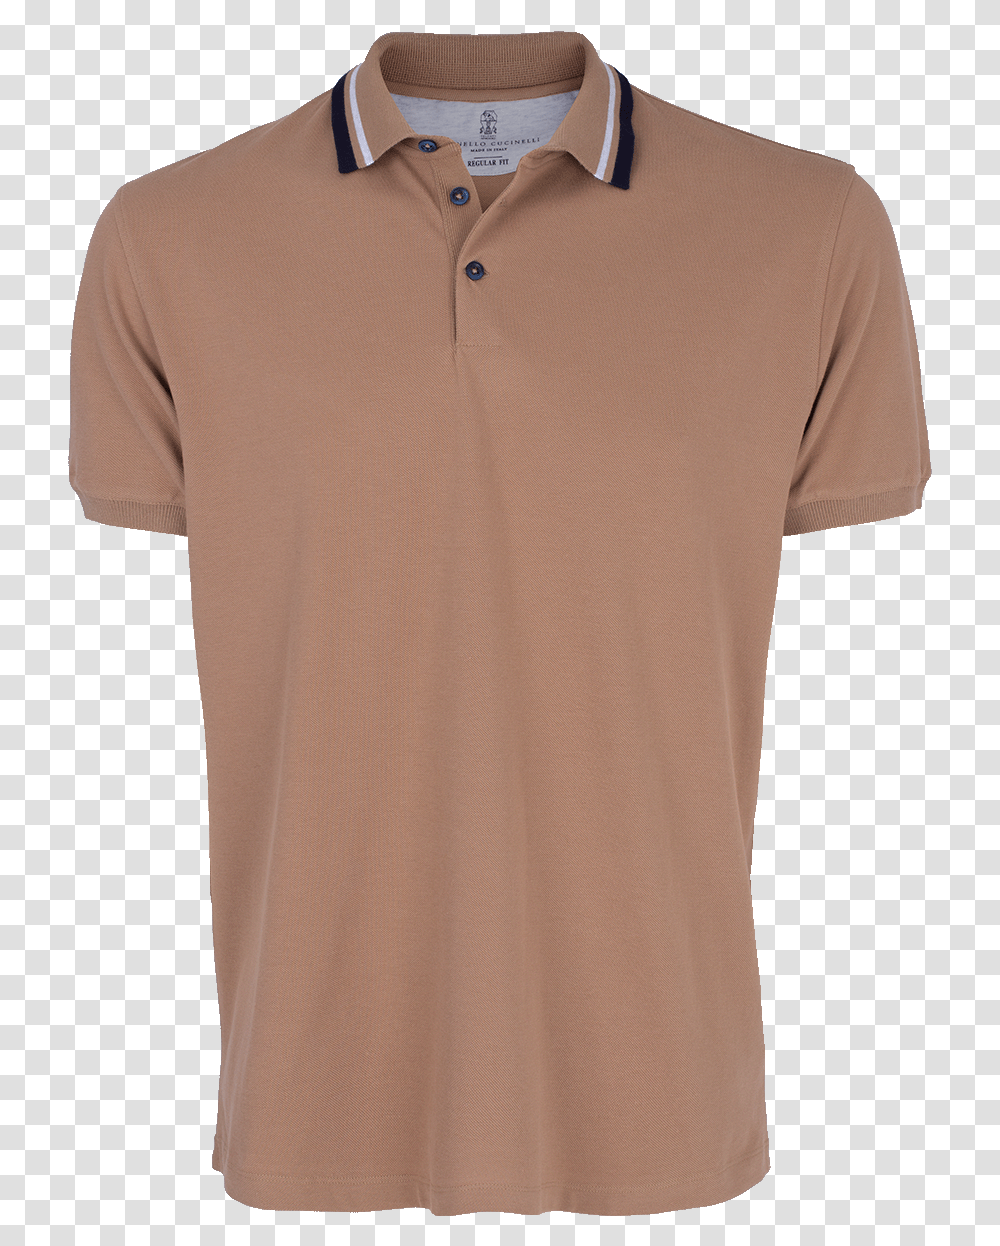 Polo Shirt, Person, Khaki, T-Shirt Transparent Png